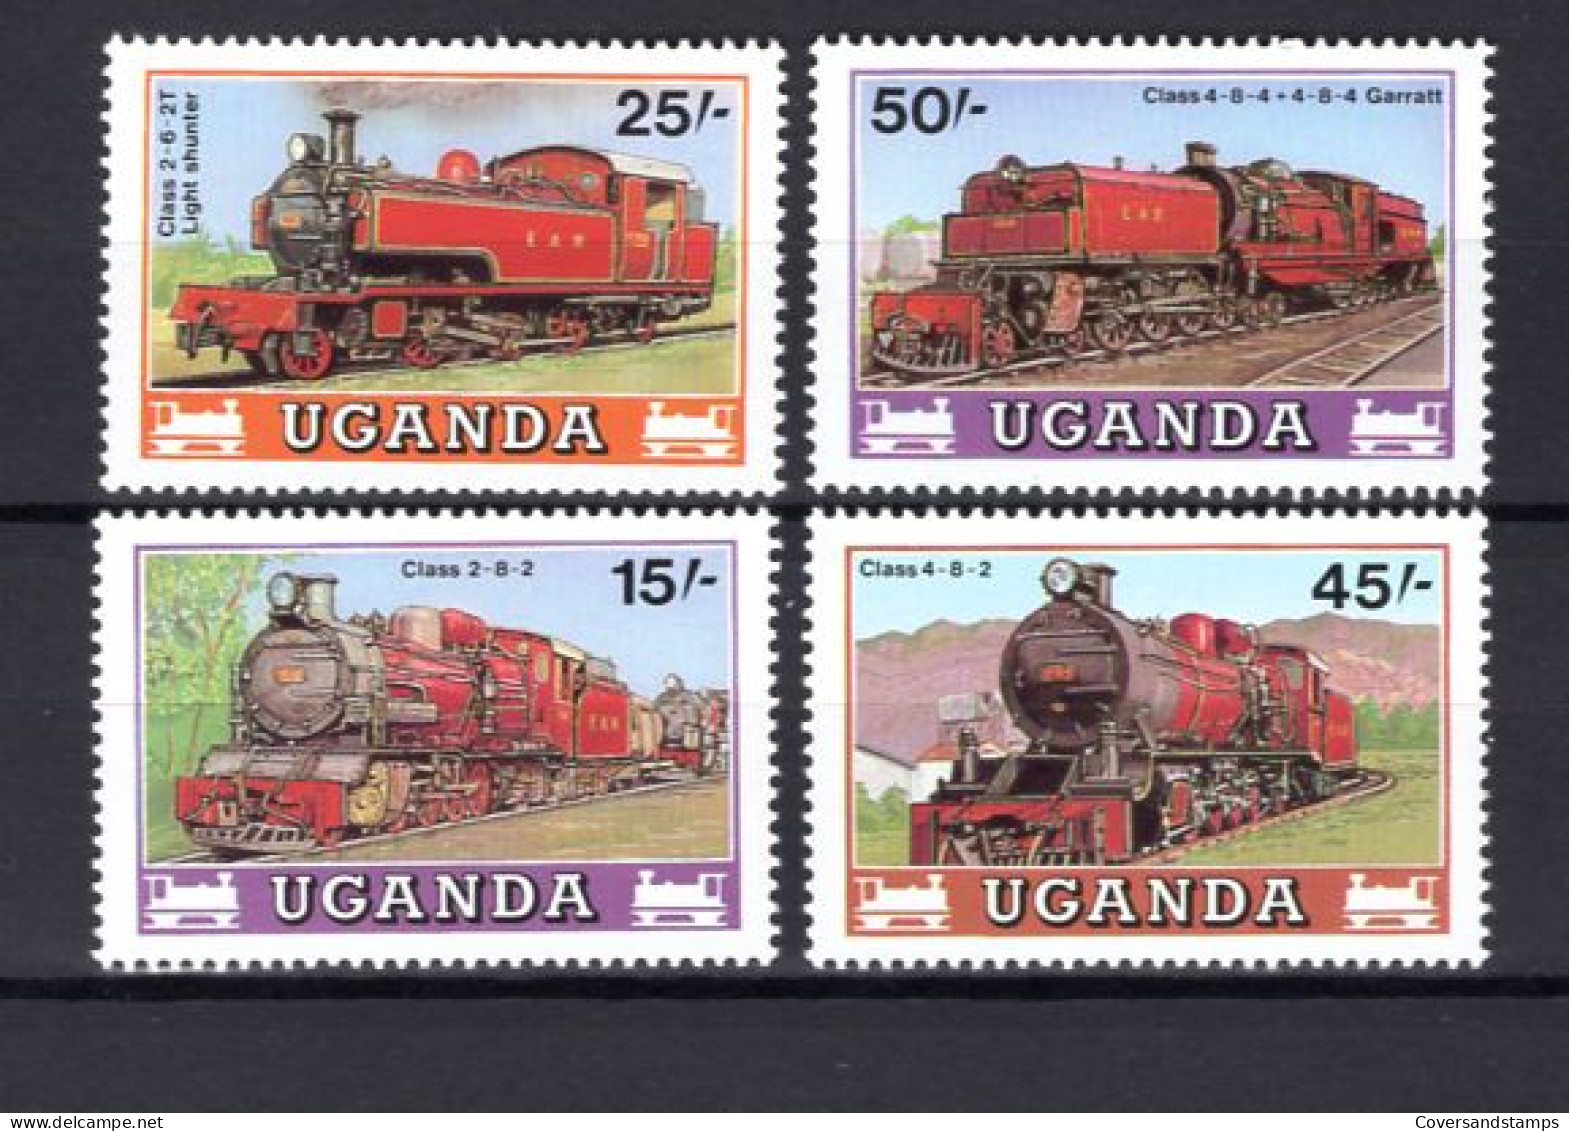  Uganda - Trains - MNH - Trenes